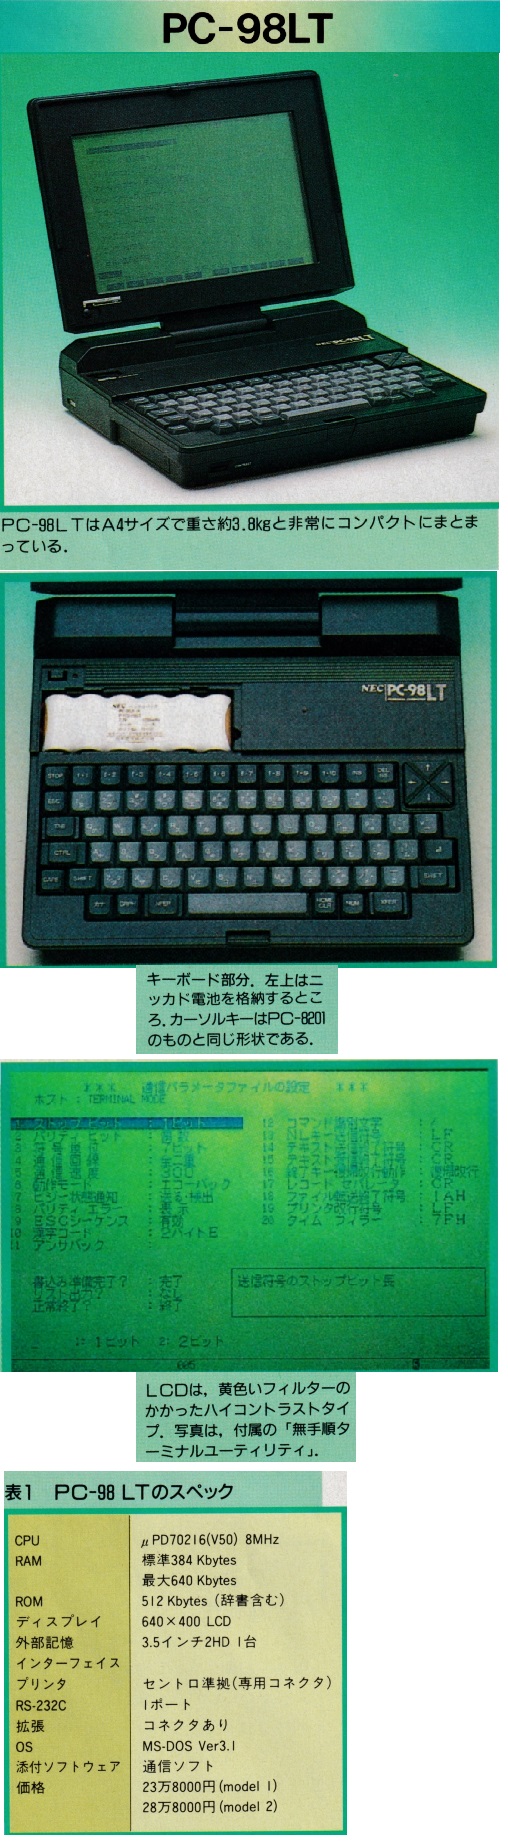 ASCII1986(12)c11_PC-98LT_W508.jpg